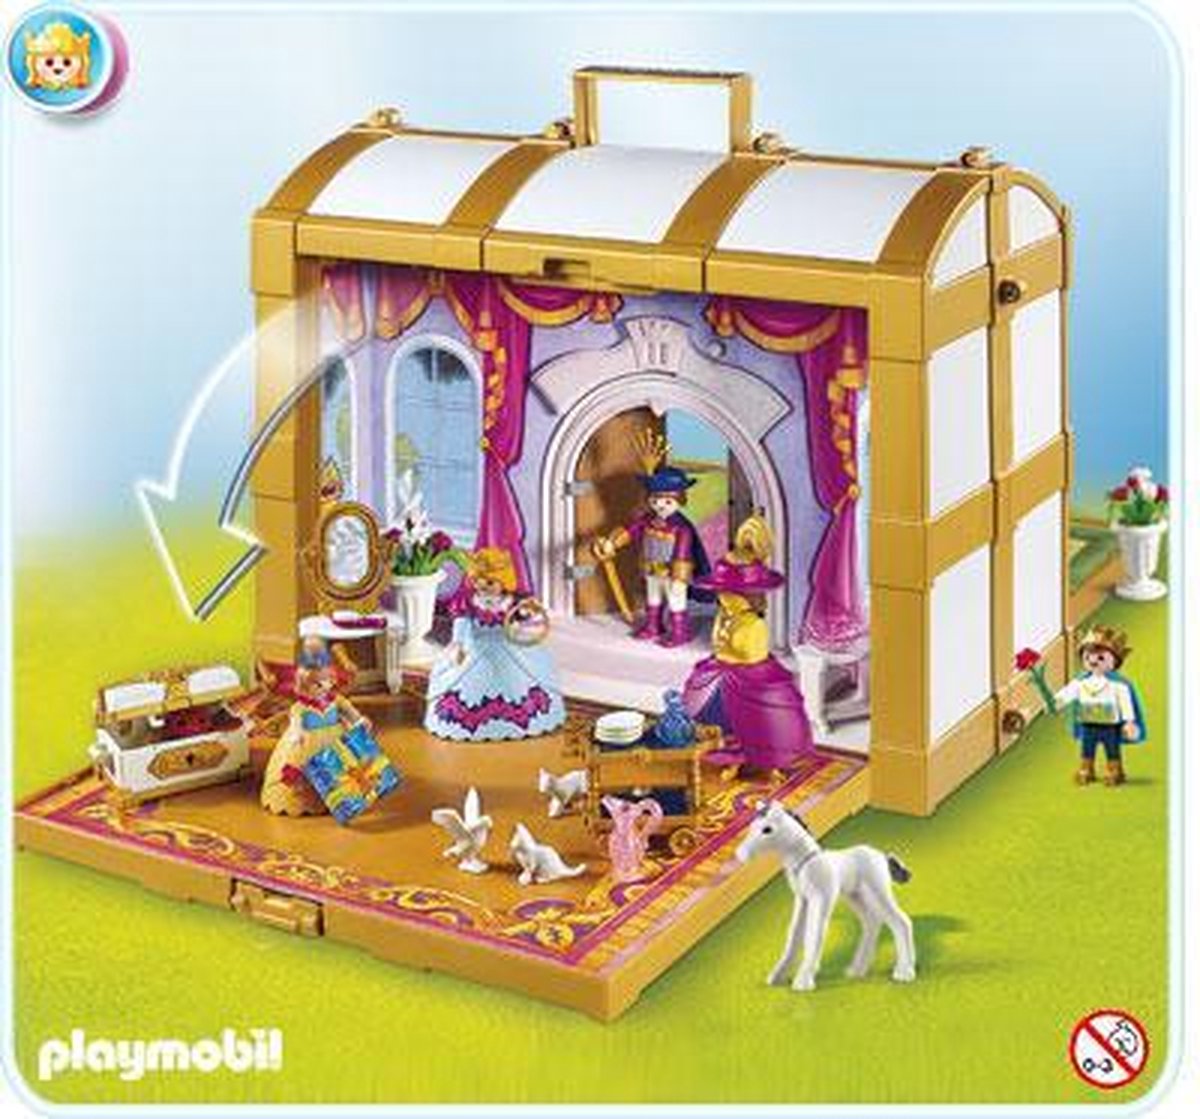 Playmobil Meeneem Prinsessenkoffer - 4249 | bol.com